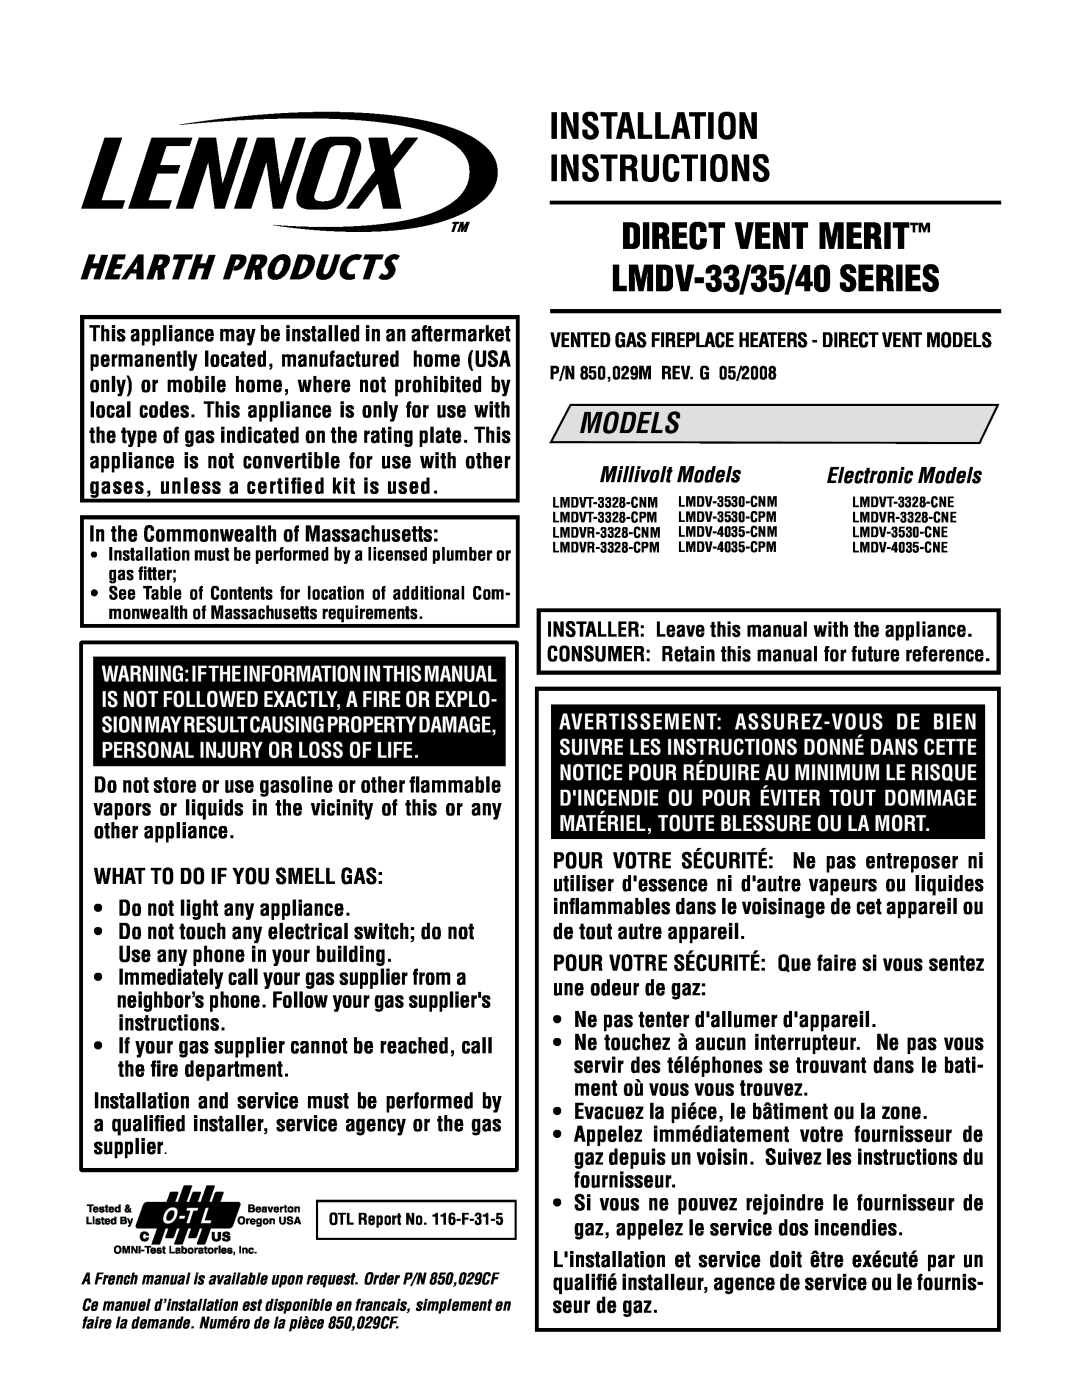 Lennox Hearth LMDVT-3328-CNM installation instructions Installation Instructions Direct Vent Merit, LMDV-33/35/40SERIES 